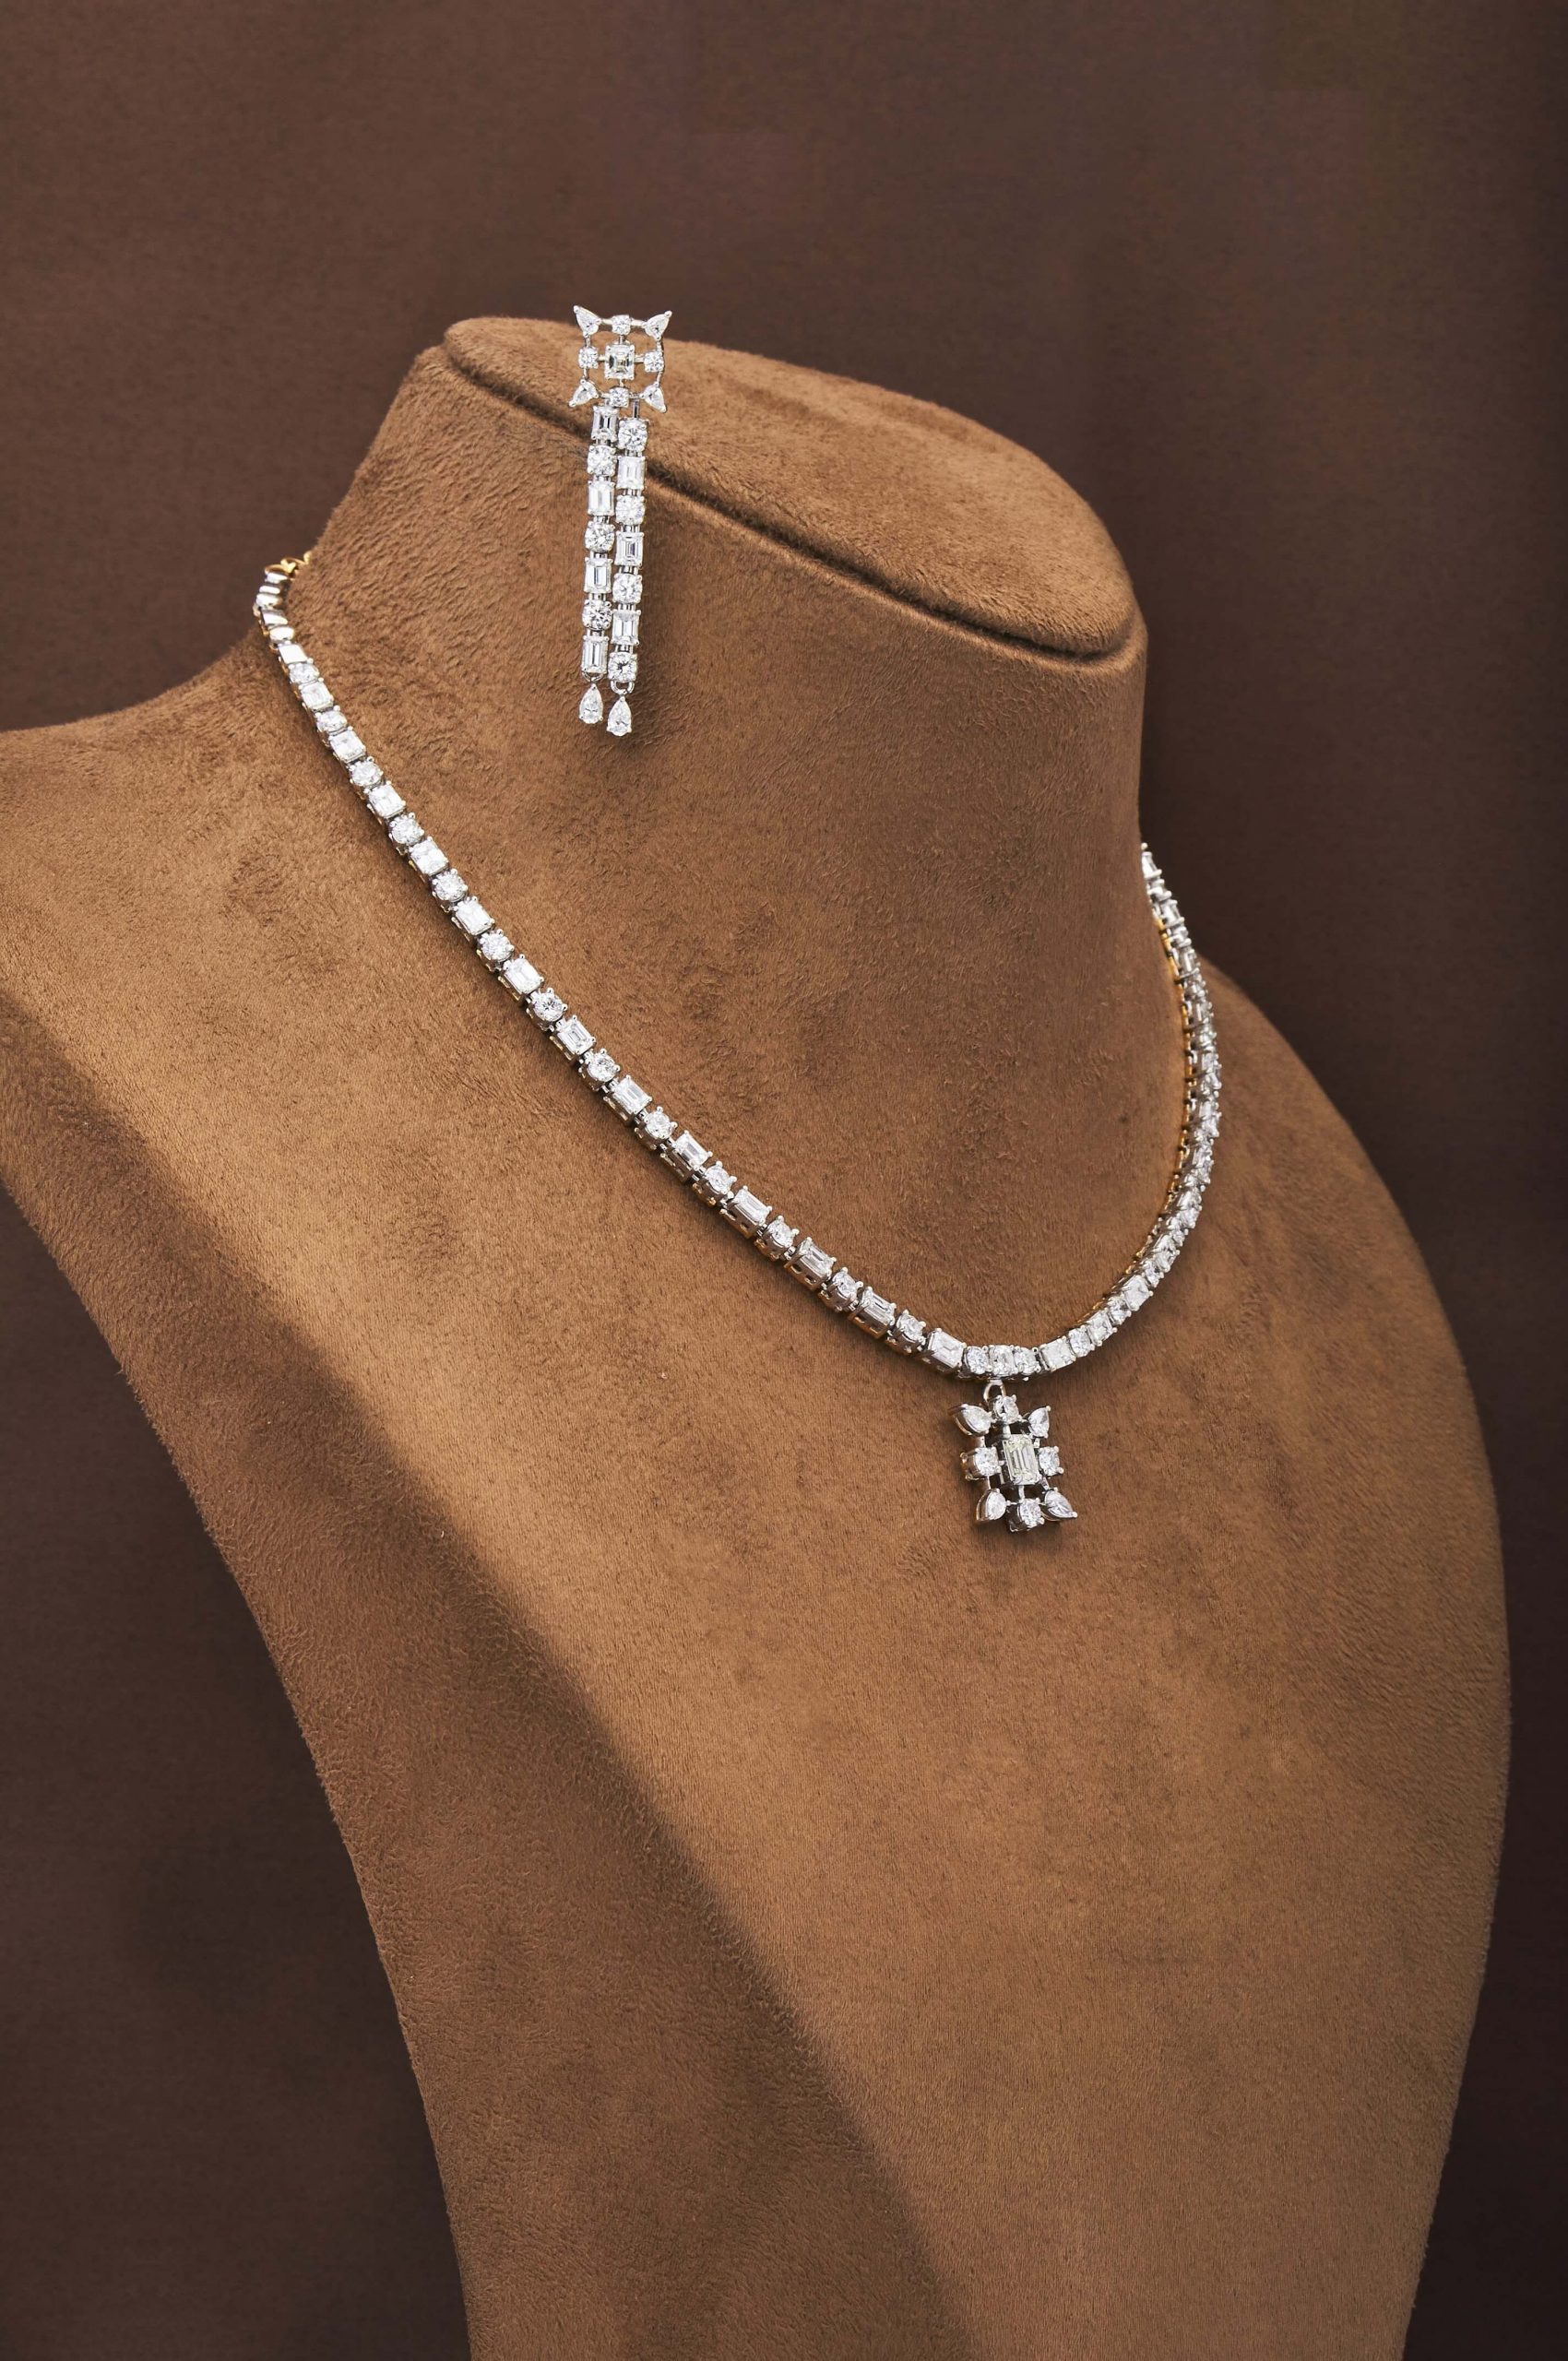 Grand Diamond Choker from PSJ - South India Jewels | Bridal fashion jewelry,  Fashion jewelry, Bridal jewelry